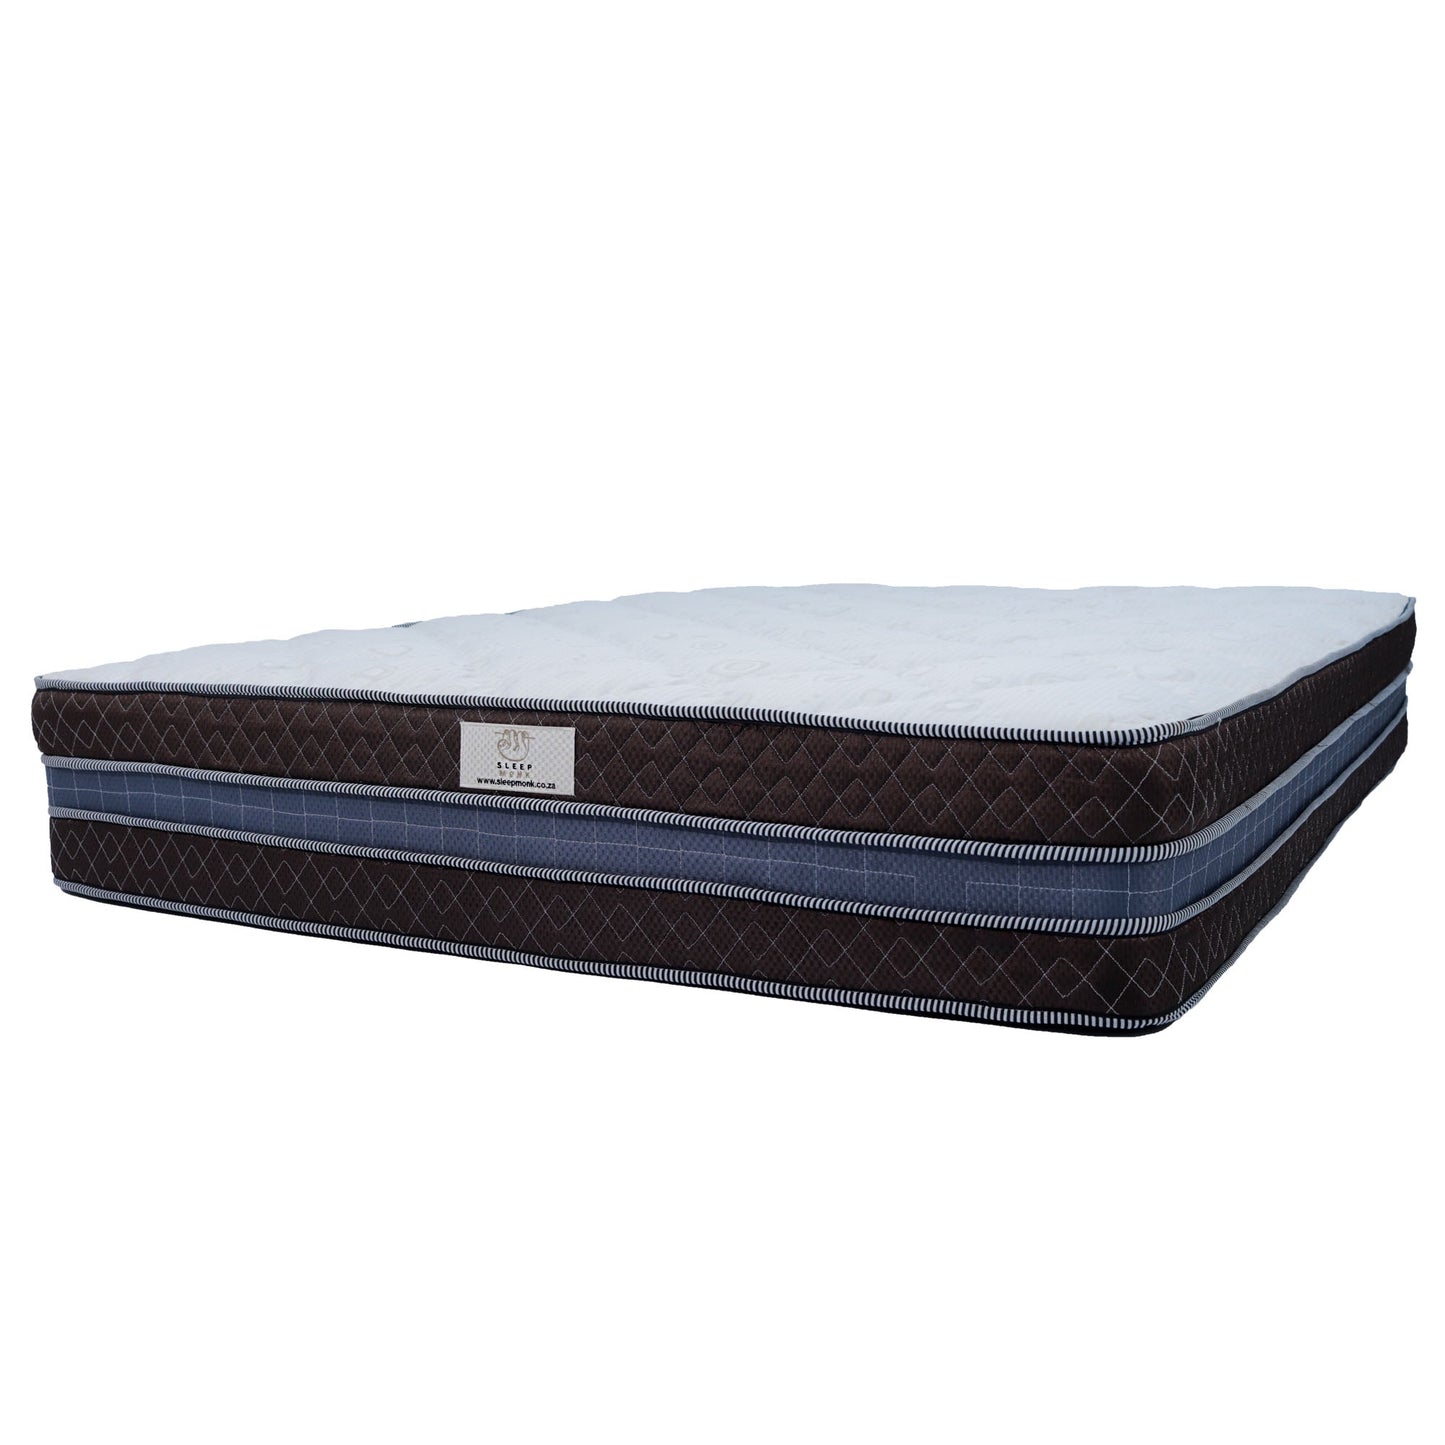 Premium EuroTop Classic Double Mattress - Premium Bed from SLEEPMONK - Just R 5500! Shop now at SLEEPMONK